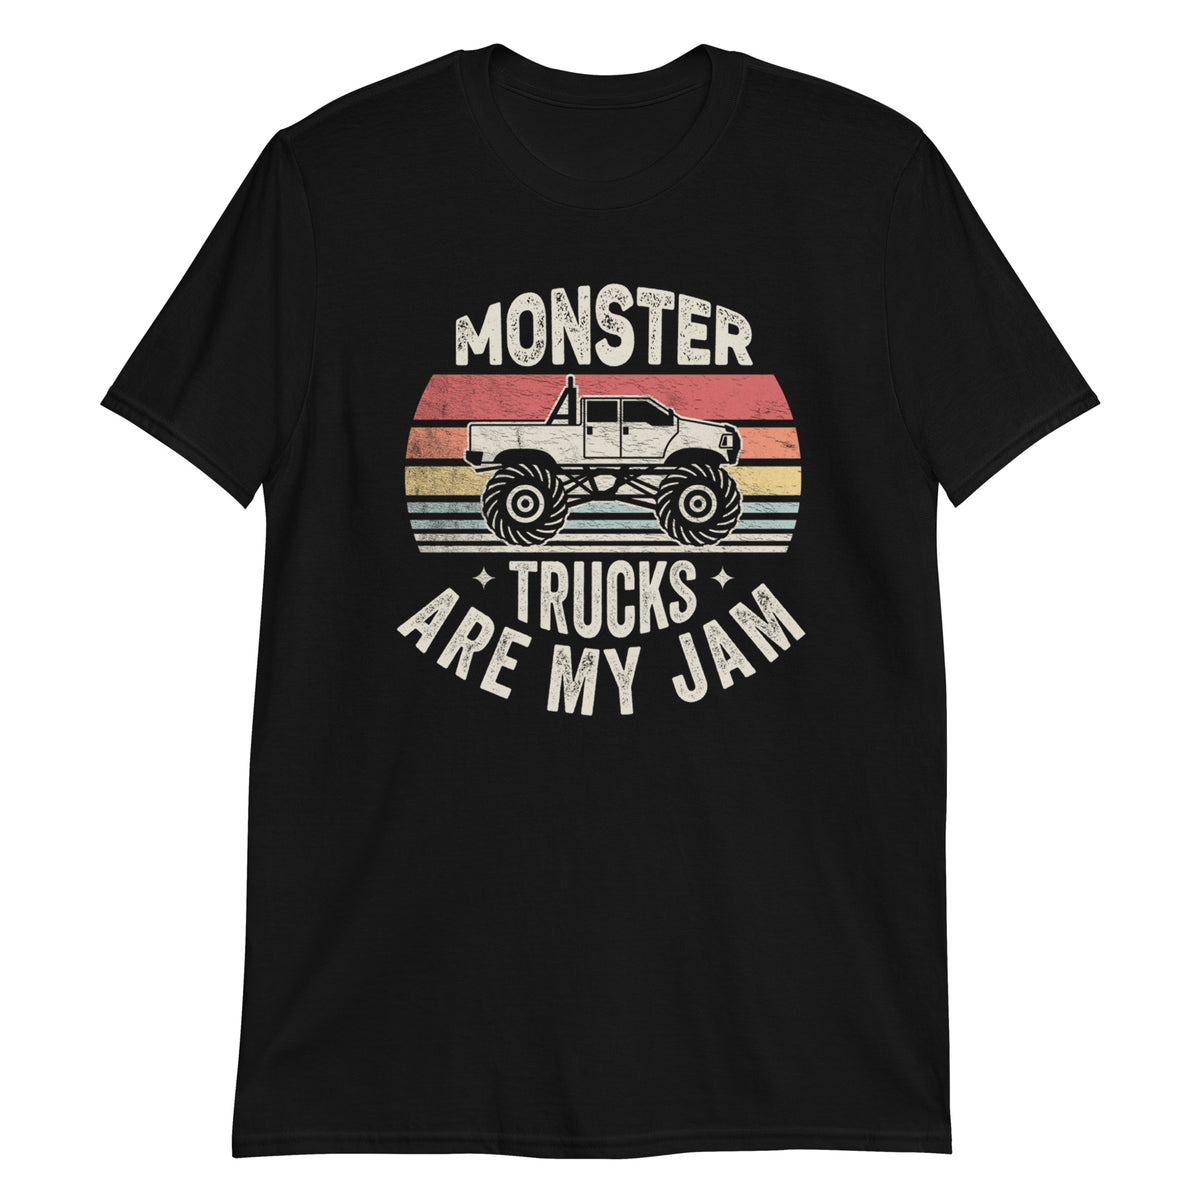 Monster Truck are My Jam T-Shirt